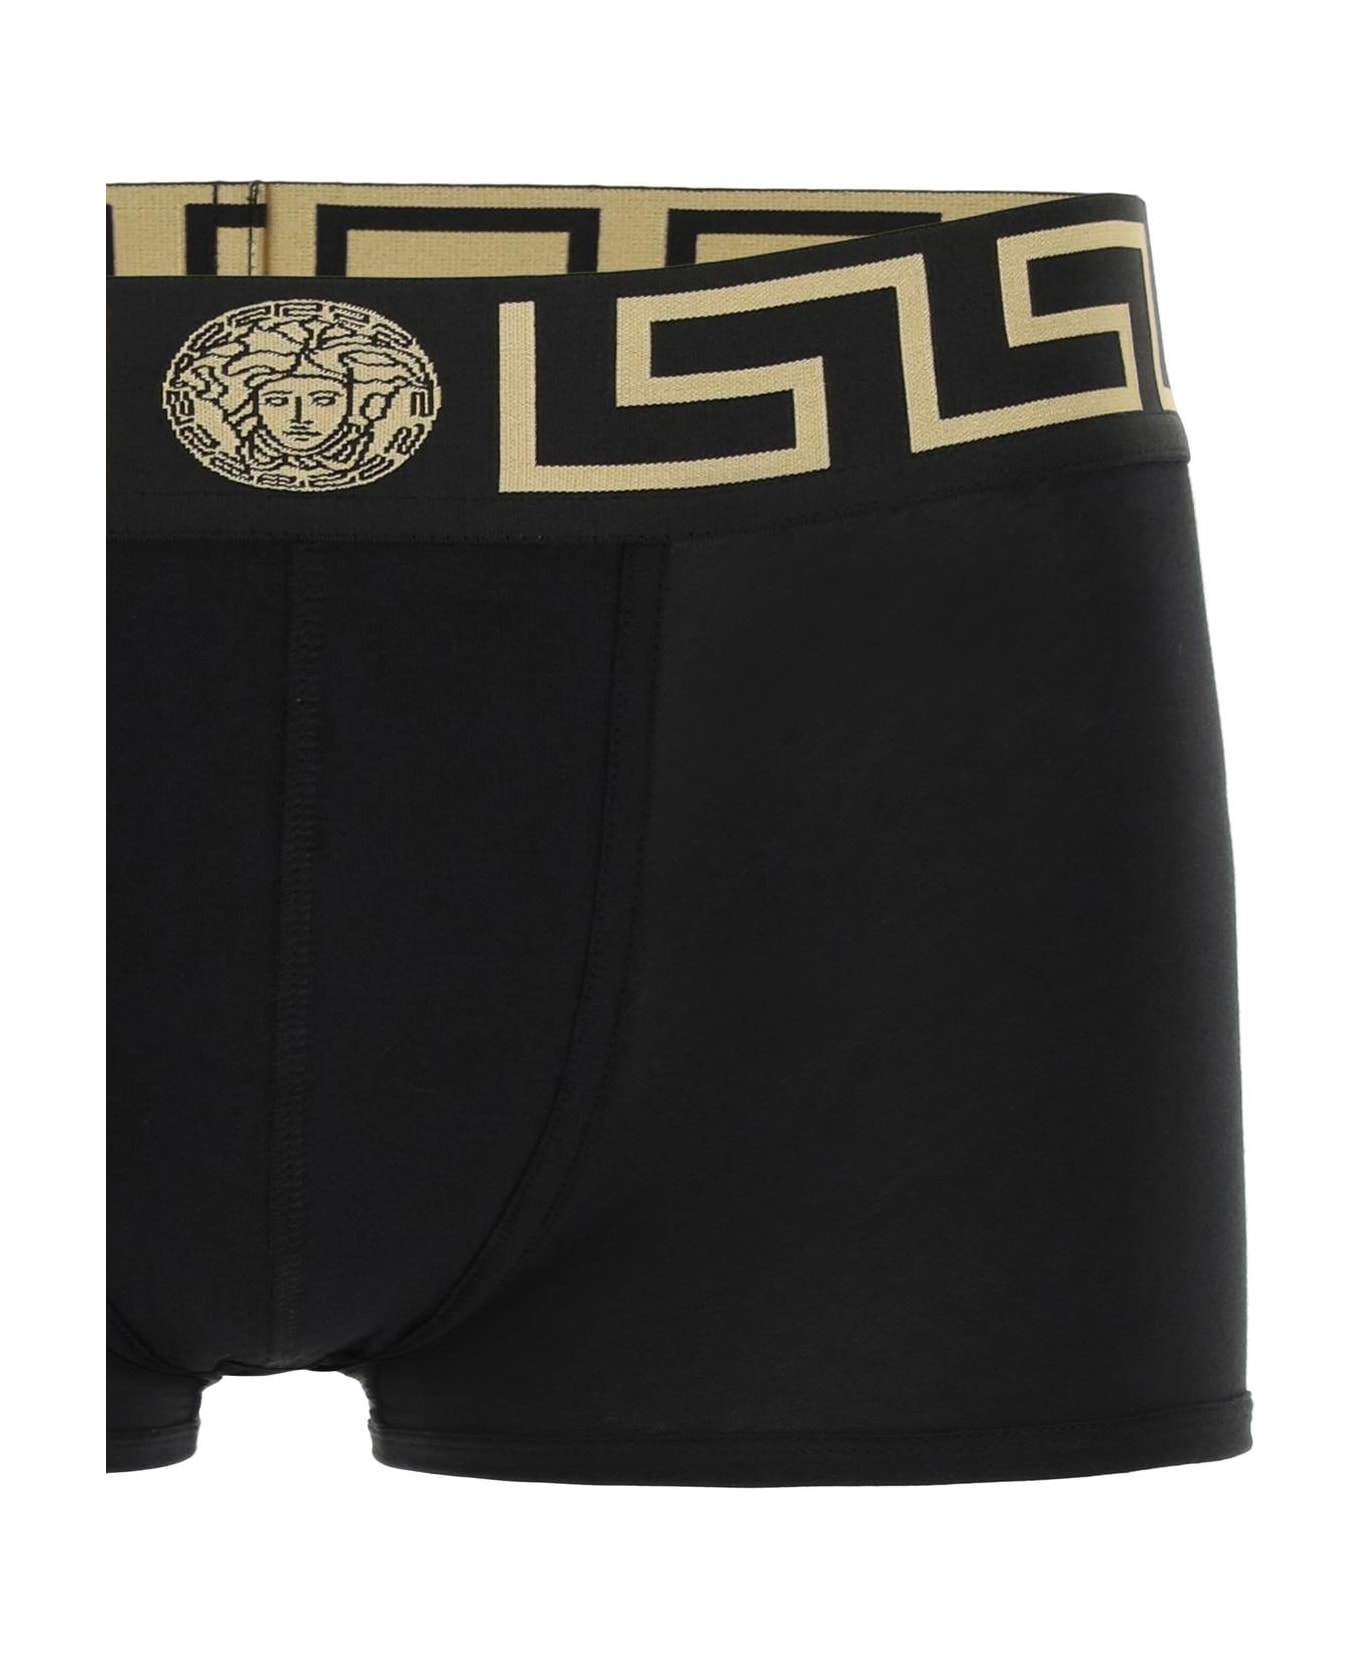 Versace Greca Border Underwear Trunks - G Black Gold ショーツ